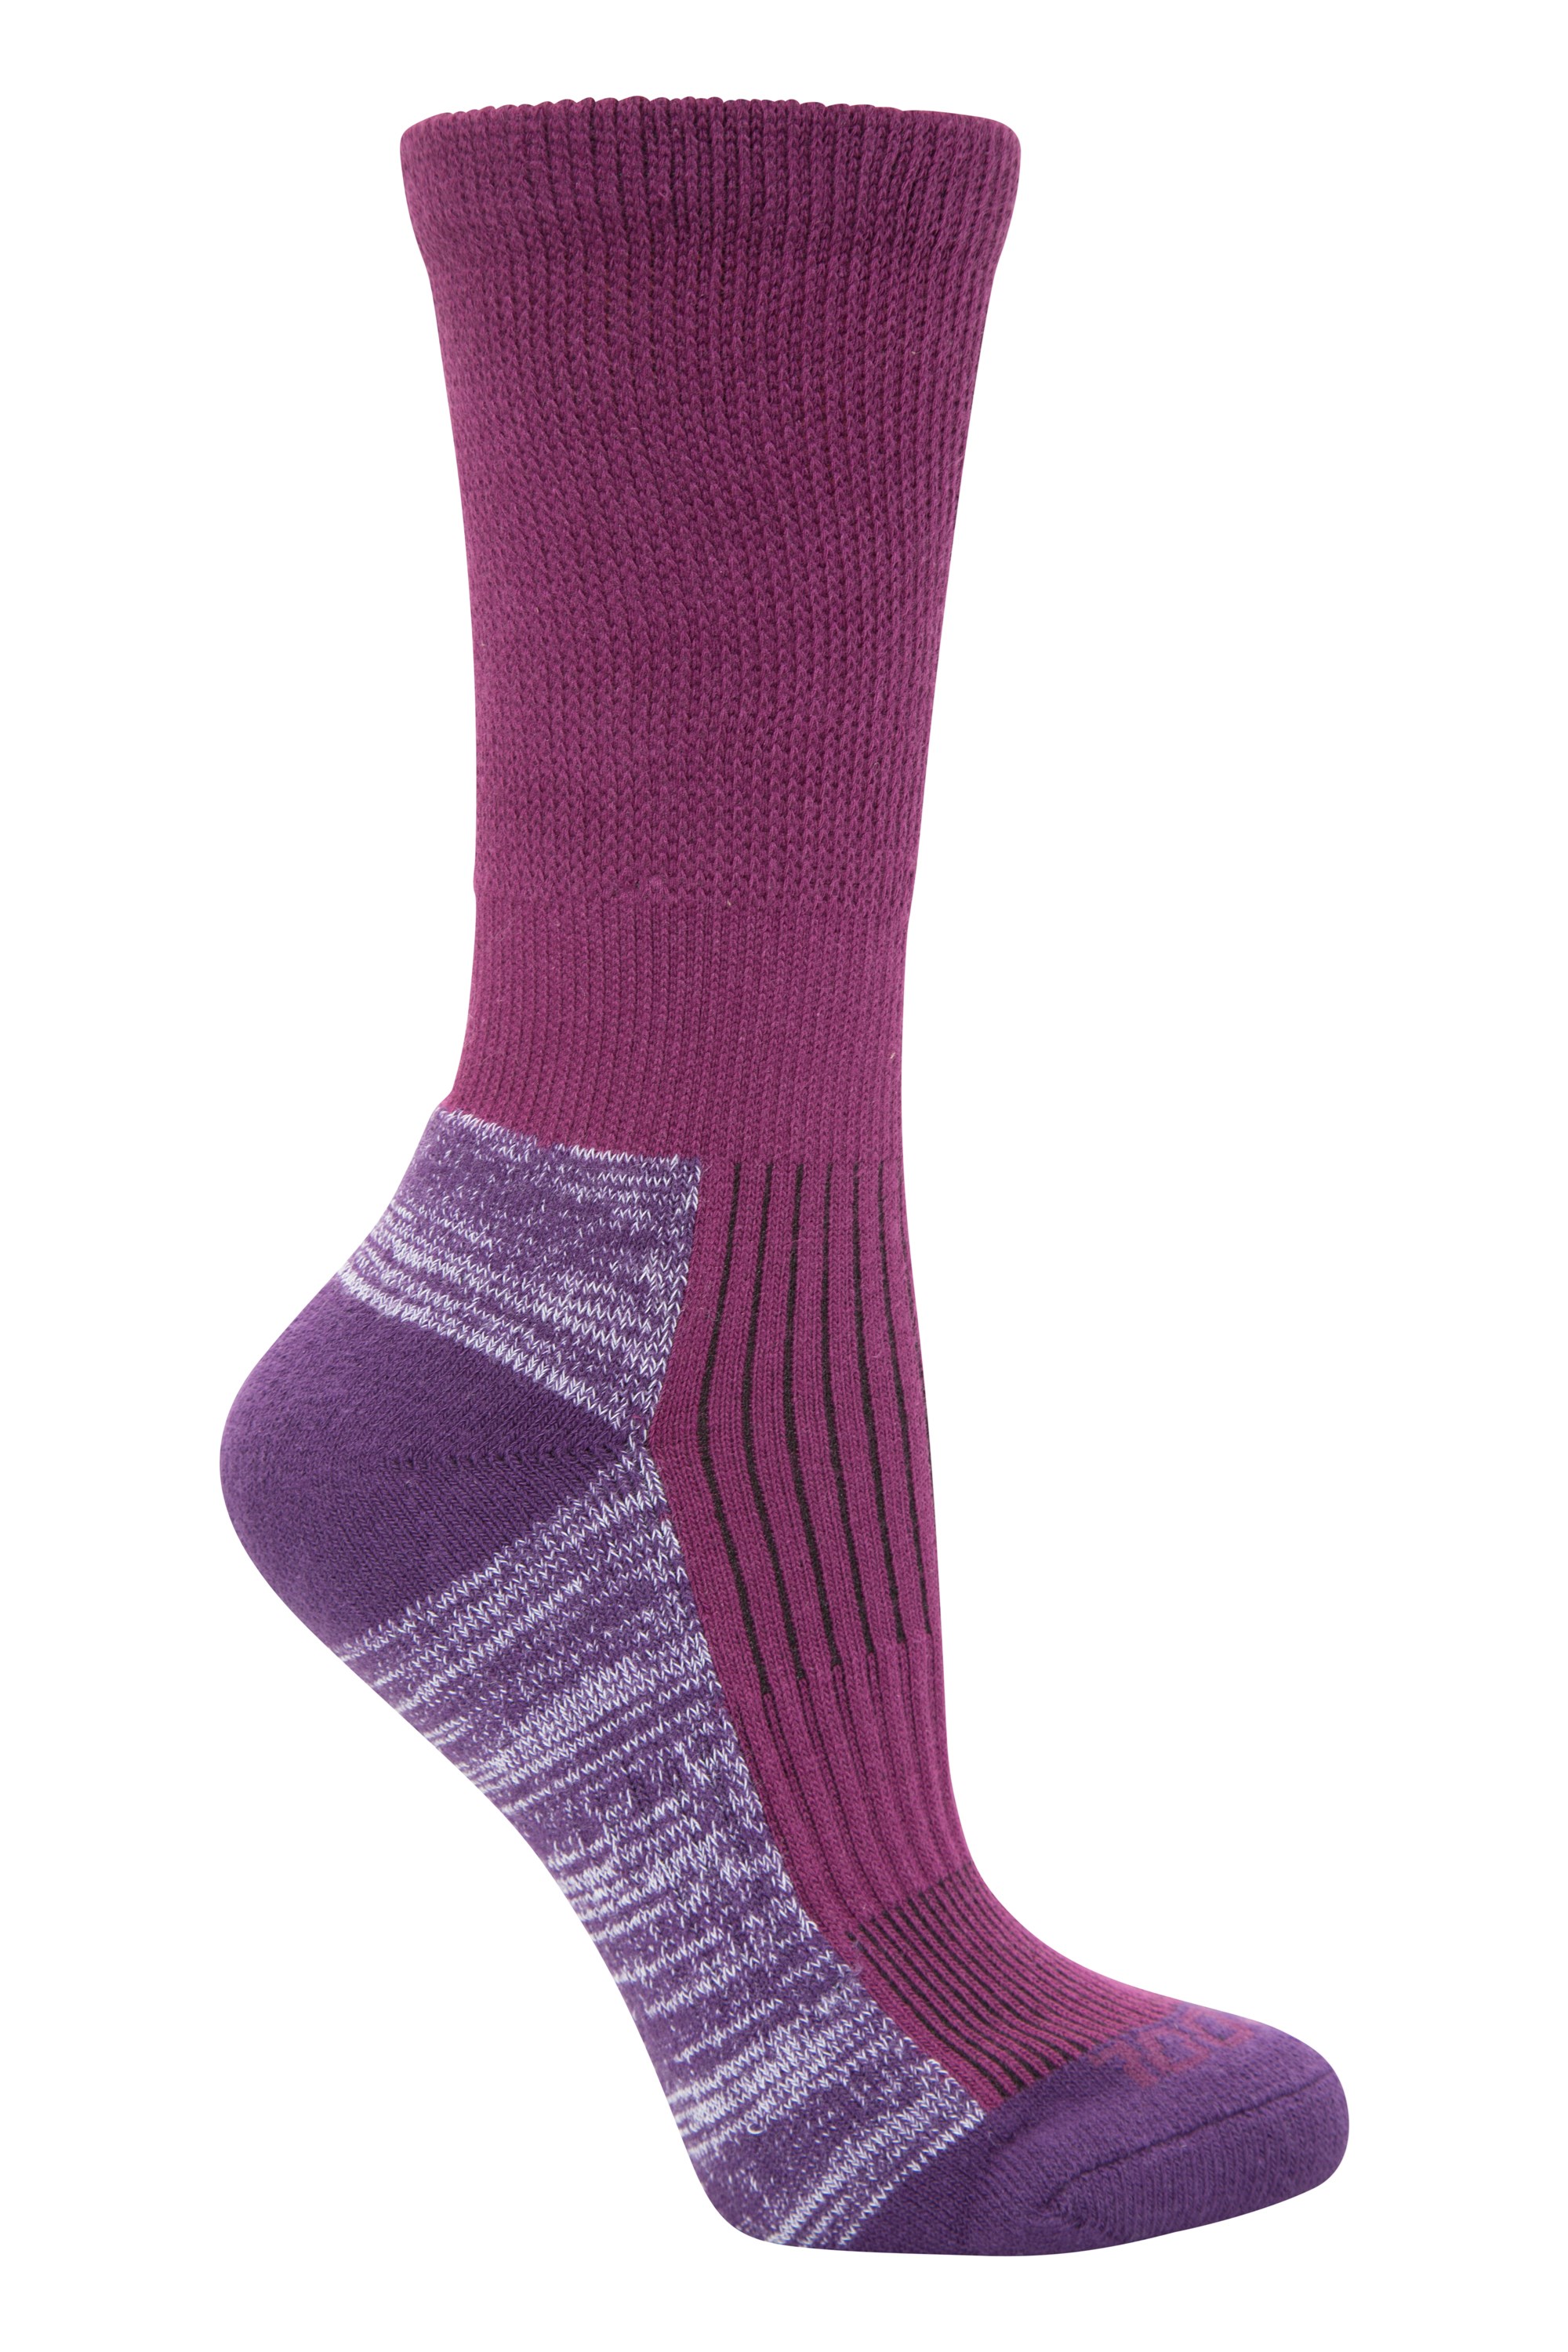 Mountain Warehouse Mountain Warehouse IsoCool Womens Trekker Sock Lightweight Durable Ladies Socks 